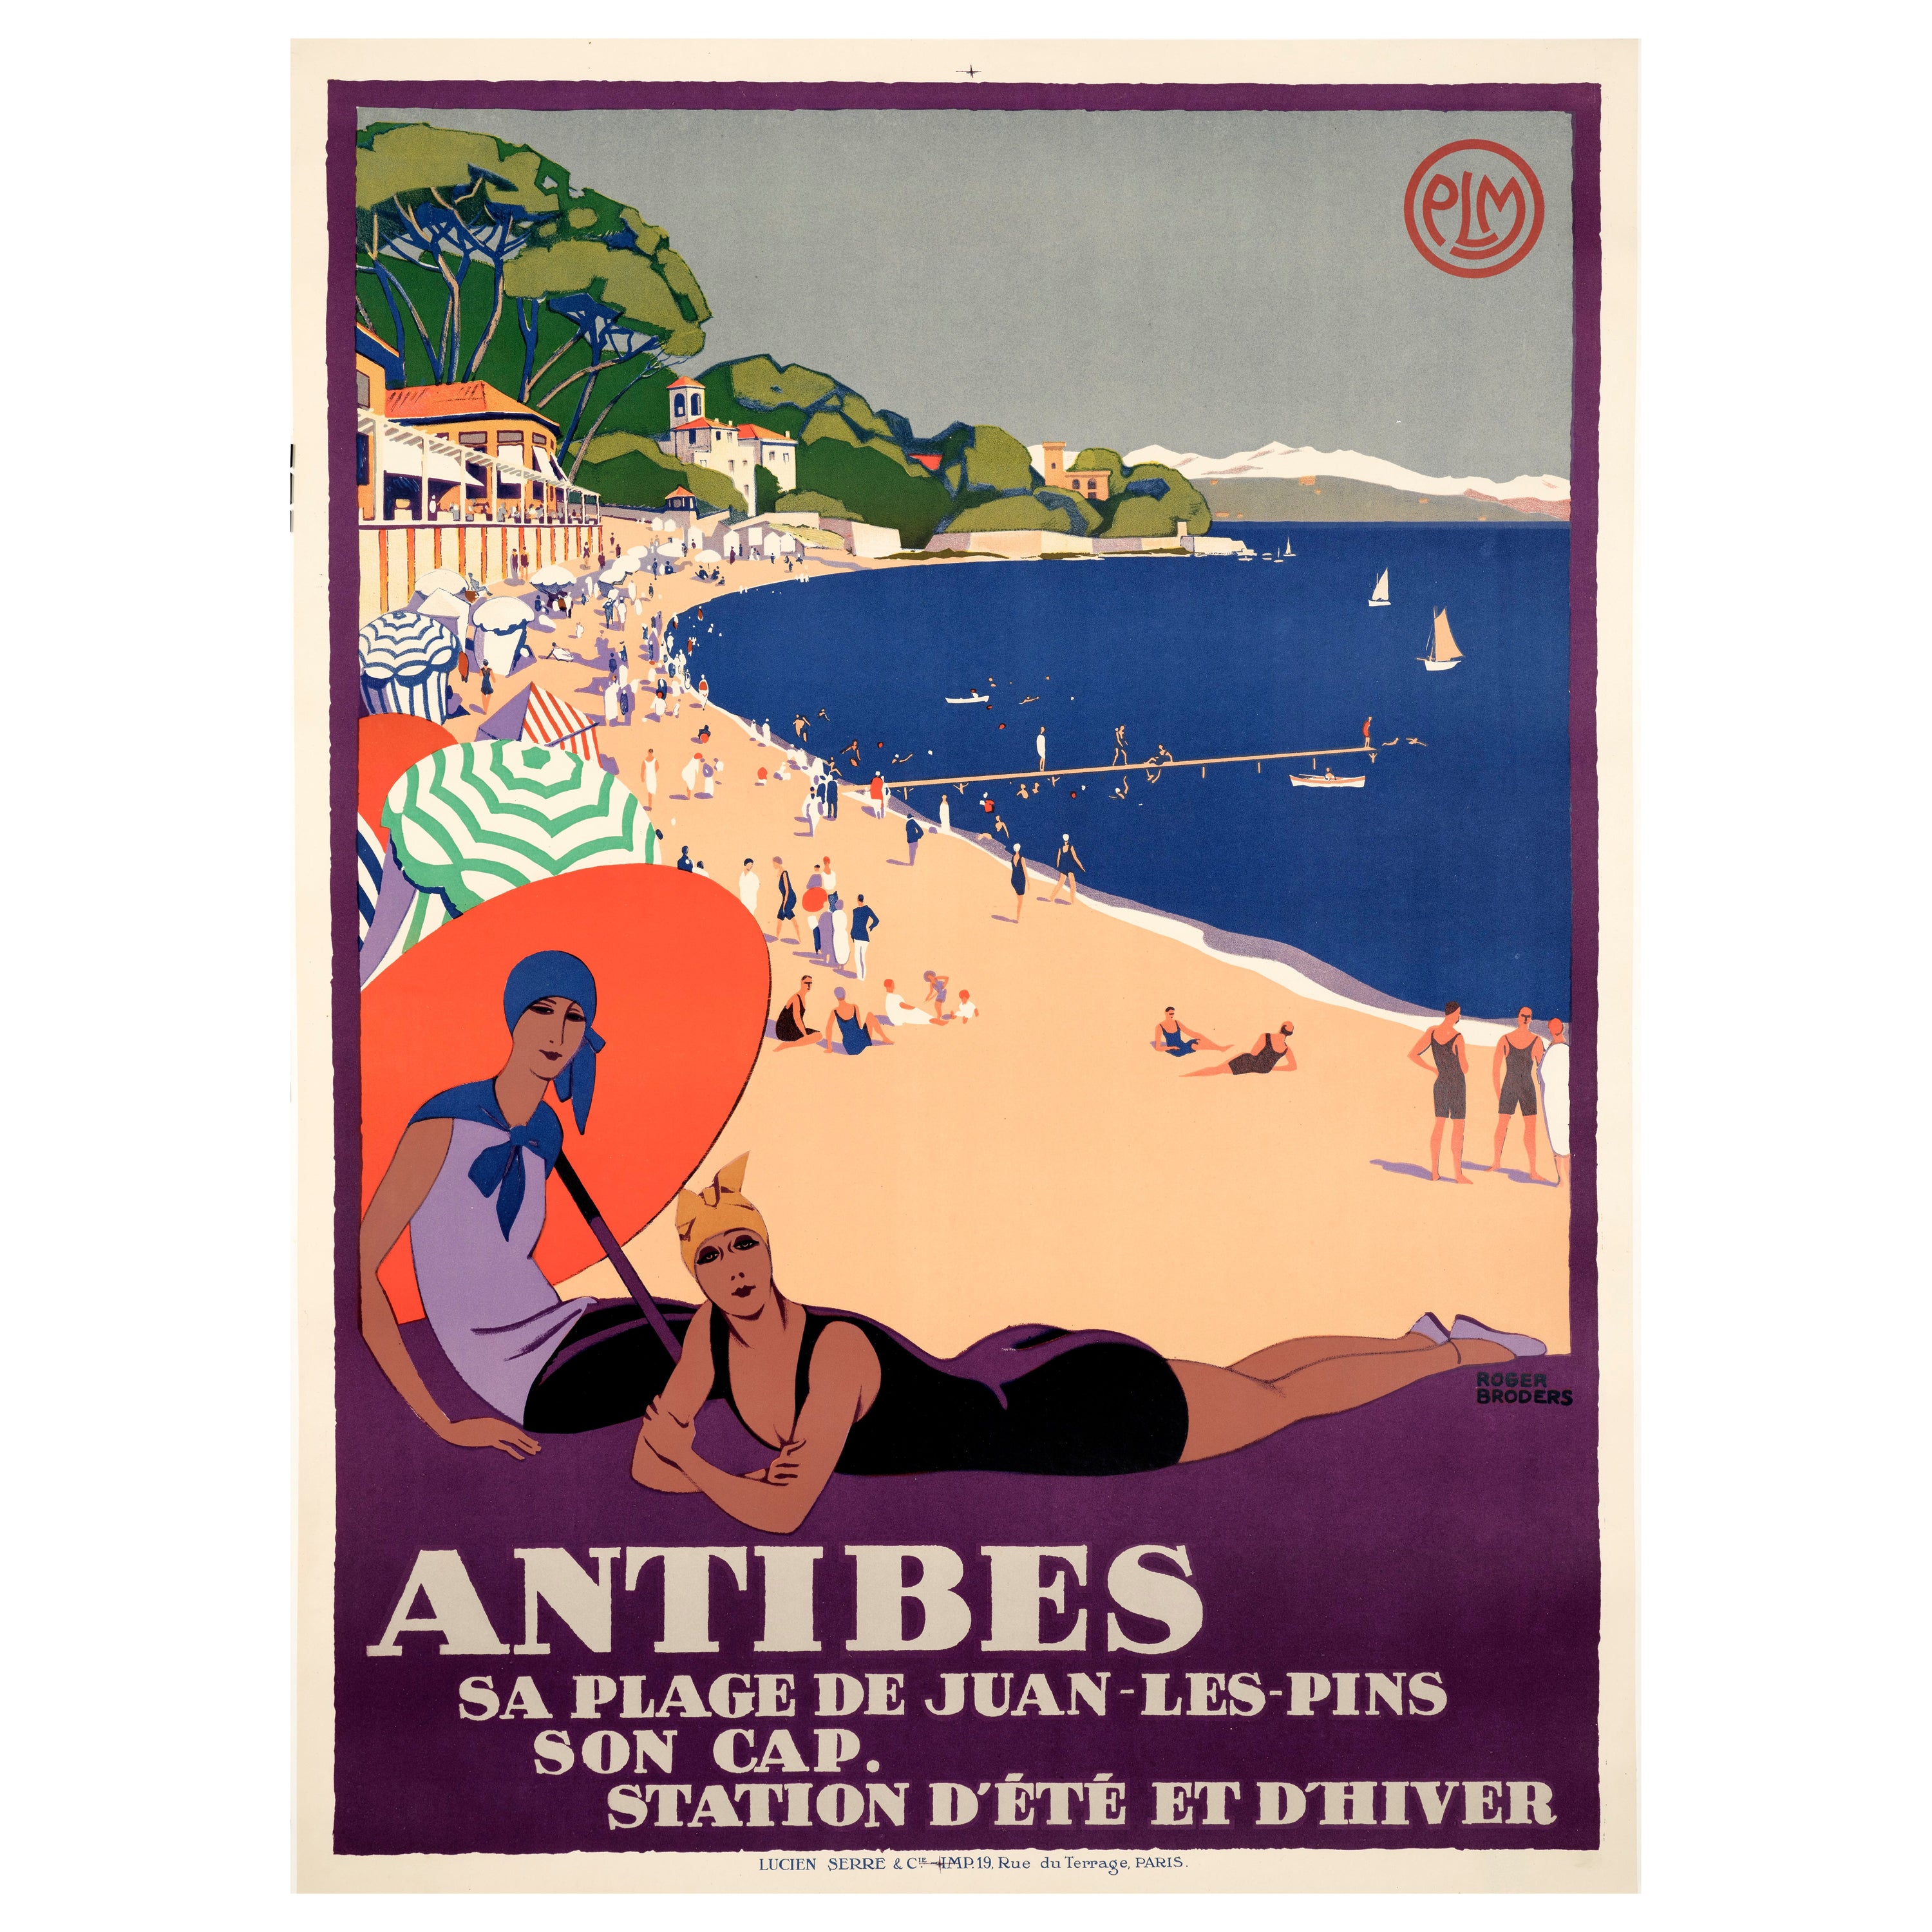 Broders, Original Art Deco Poster, Antibes, French Riviera, Beach, PLM, 1928